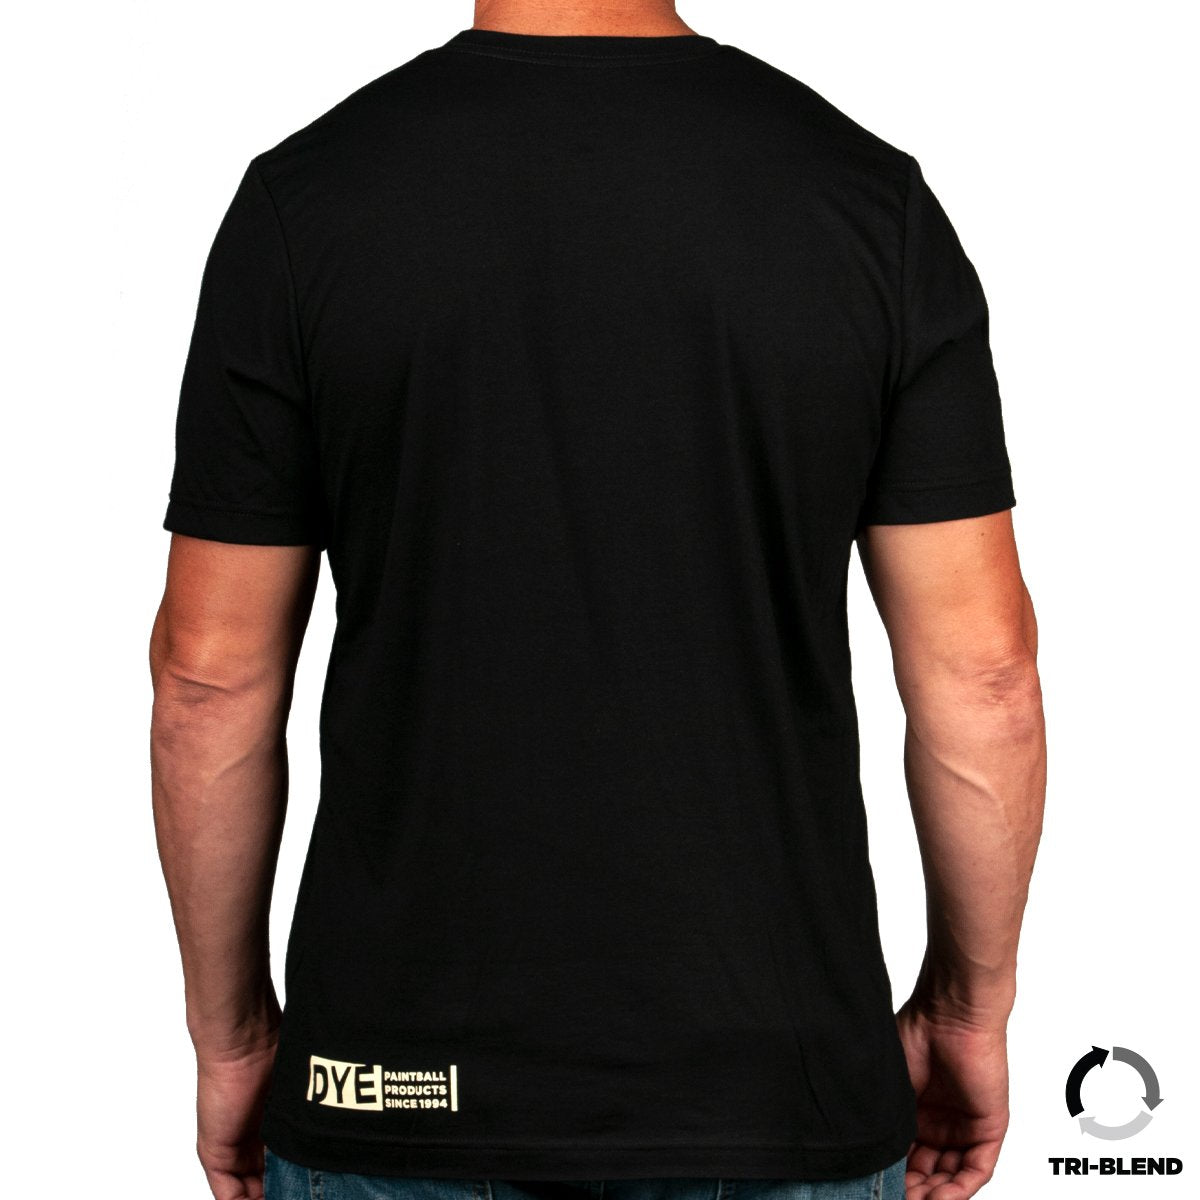 Sphere Shirt - Black